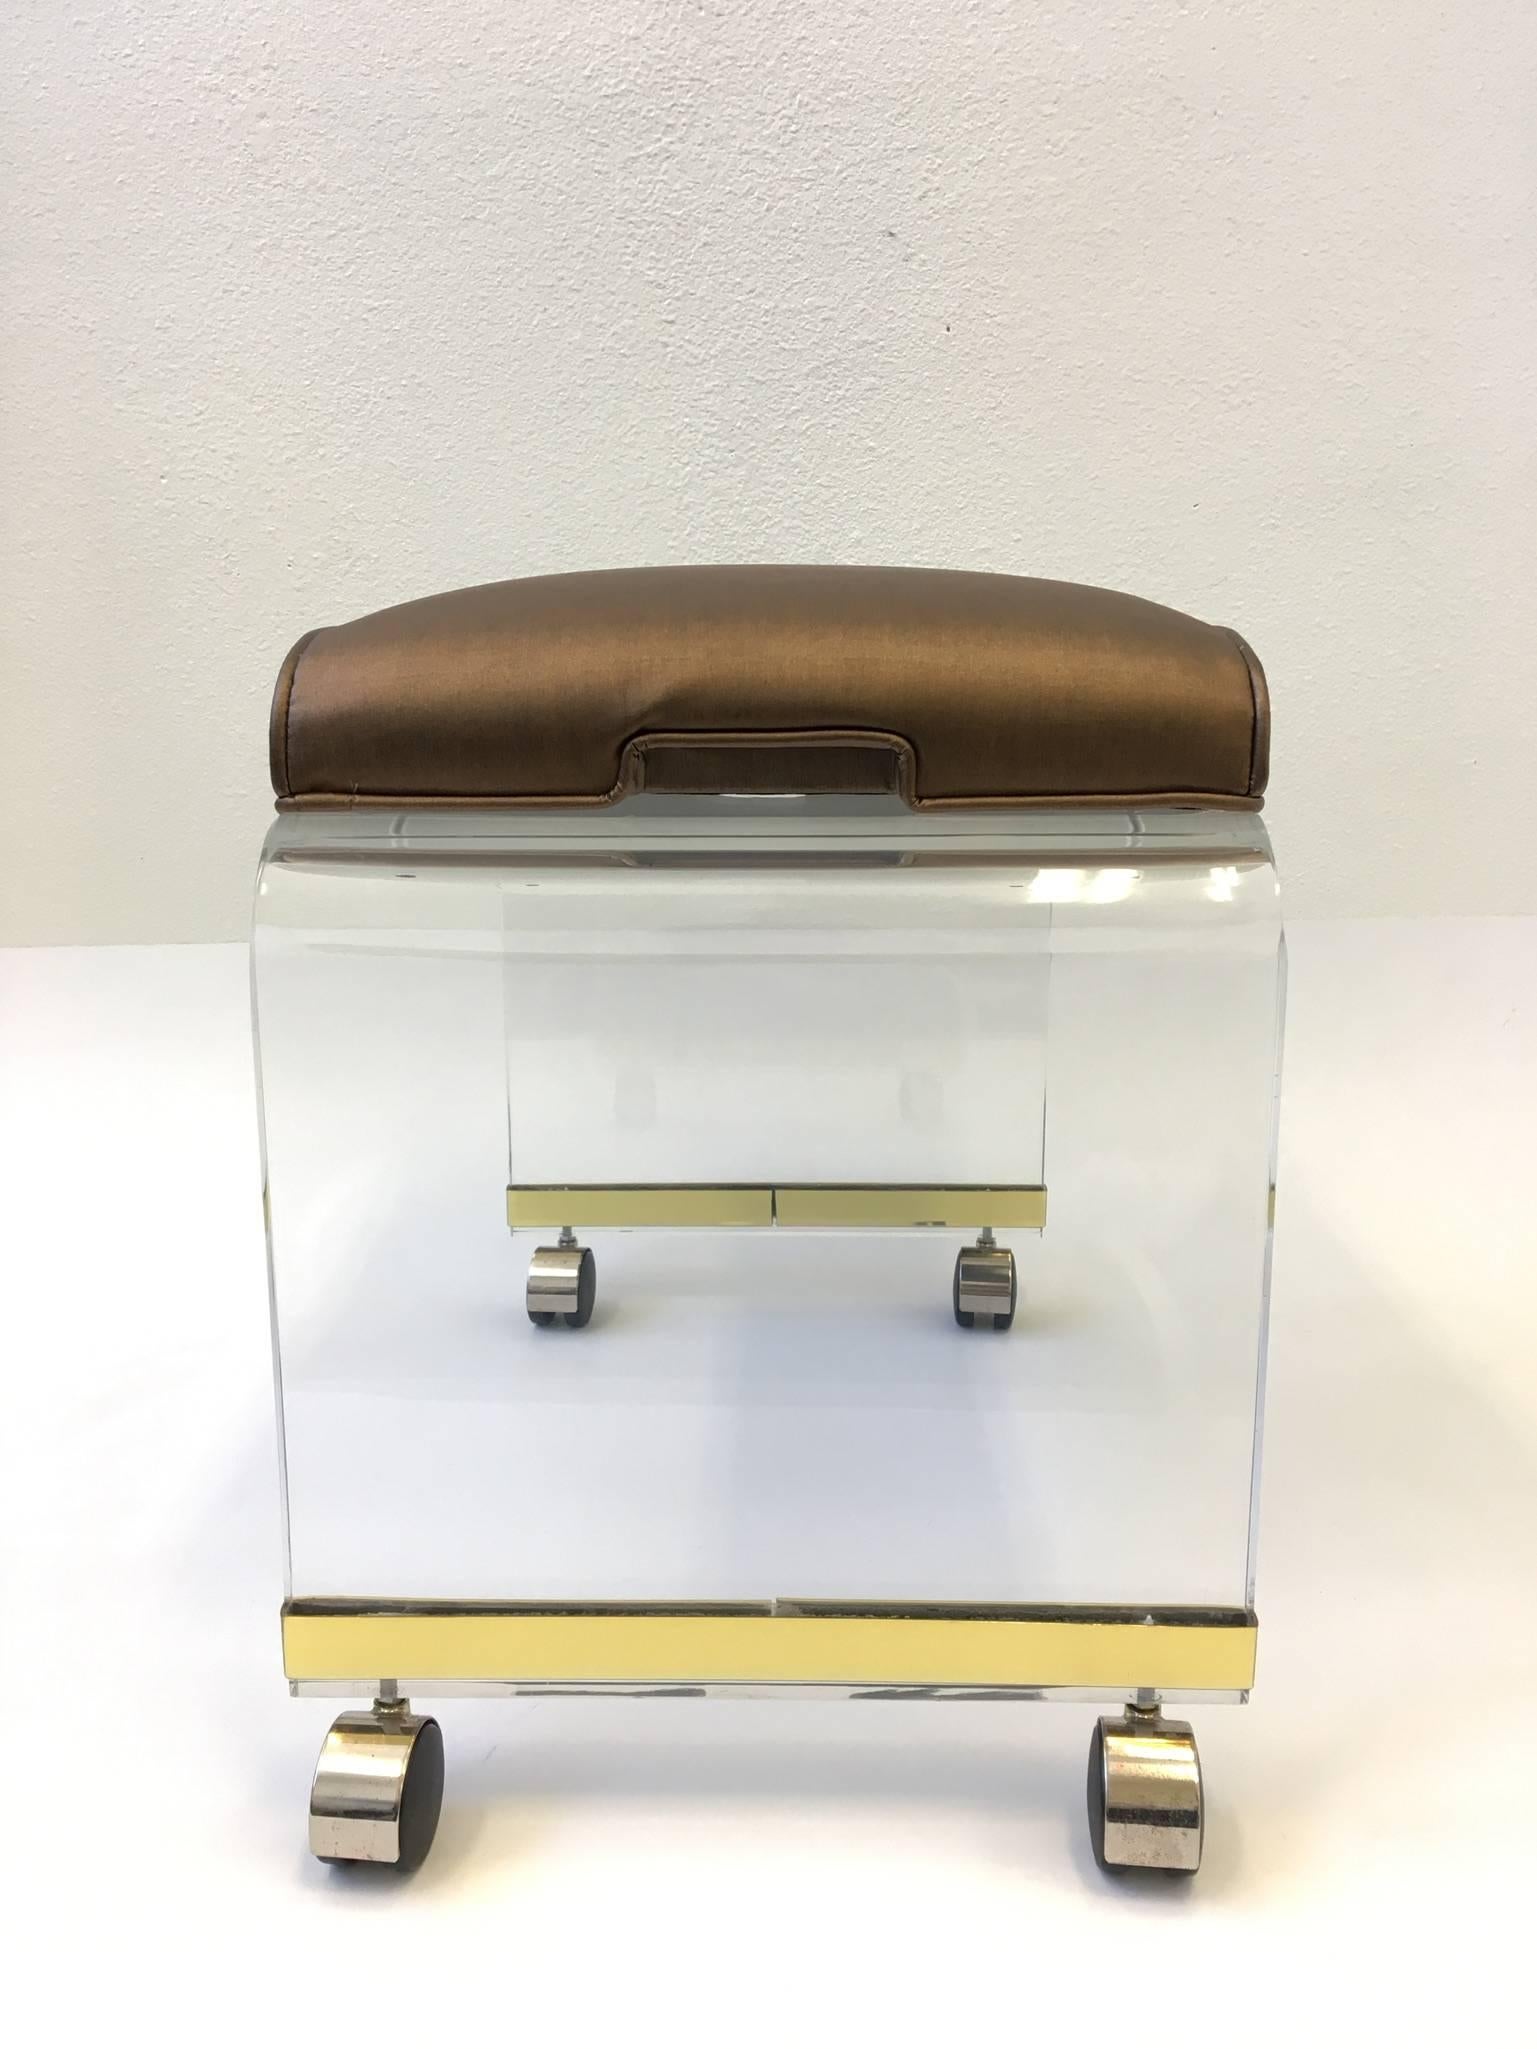 acrylic vanity stool